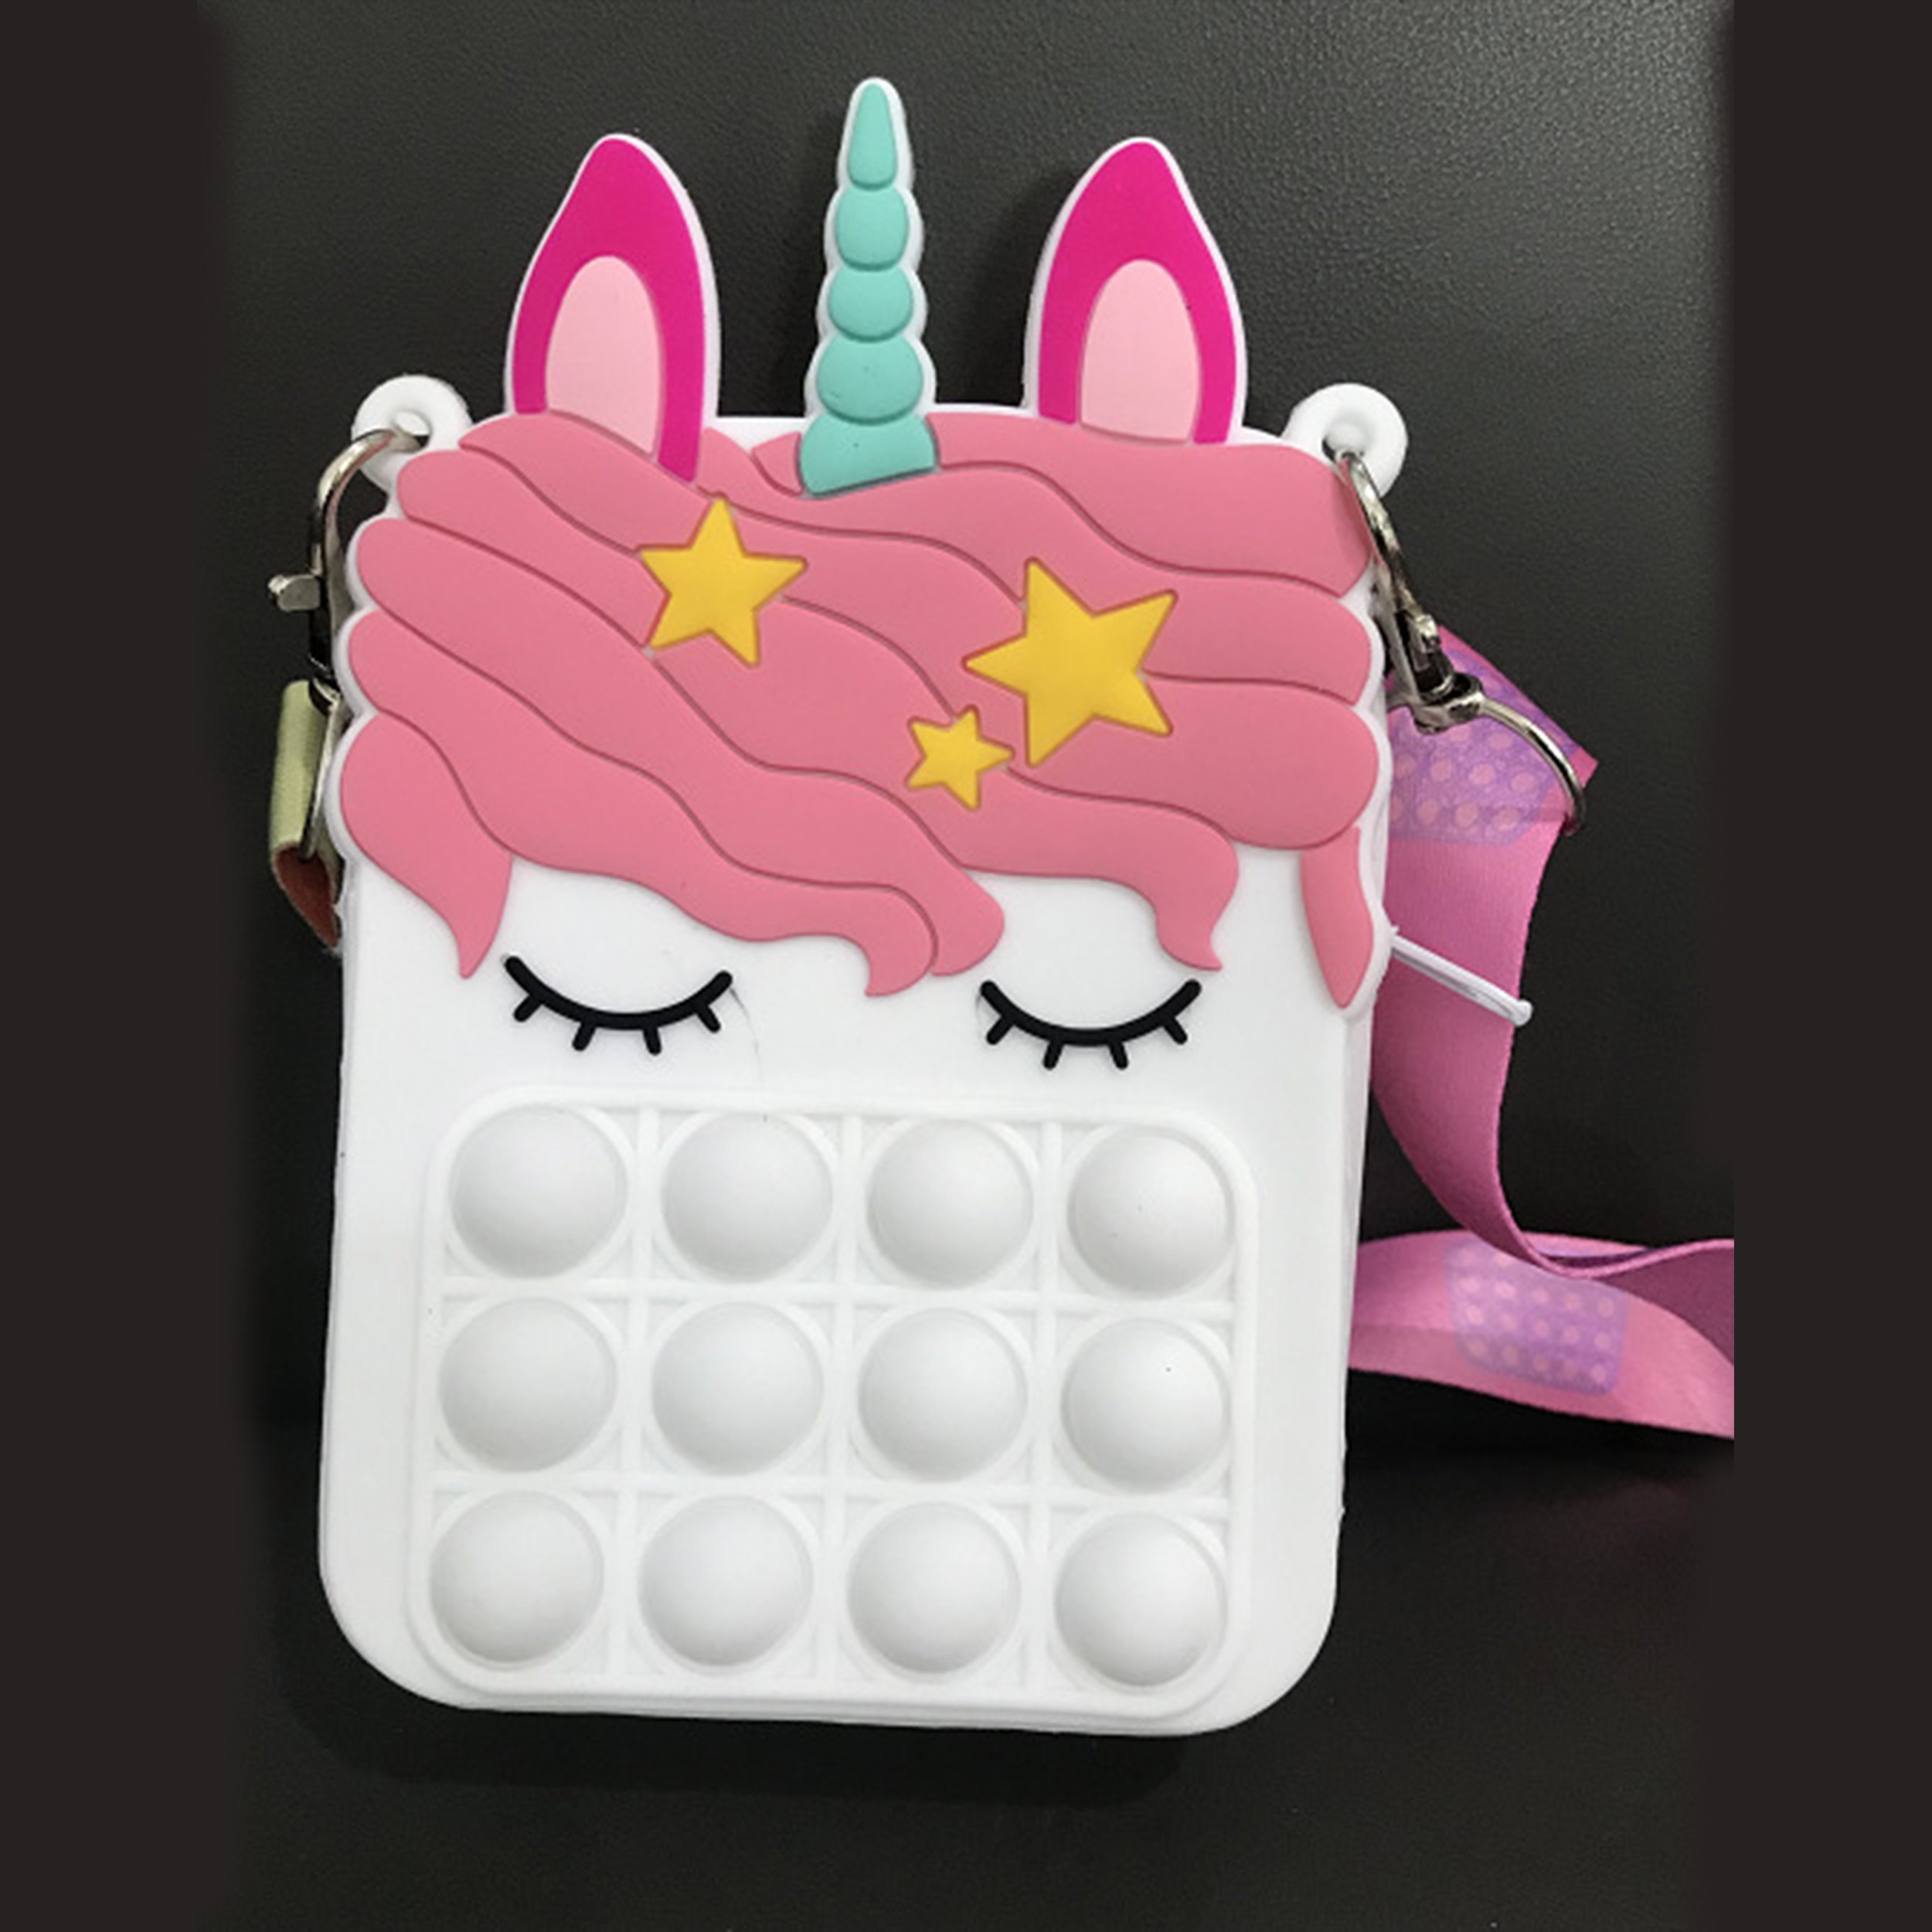 Bubble pop popping game pop it |unicorn coin bag purse pop it bags